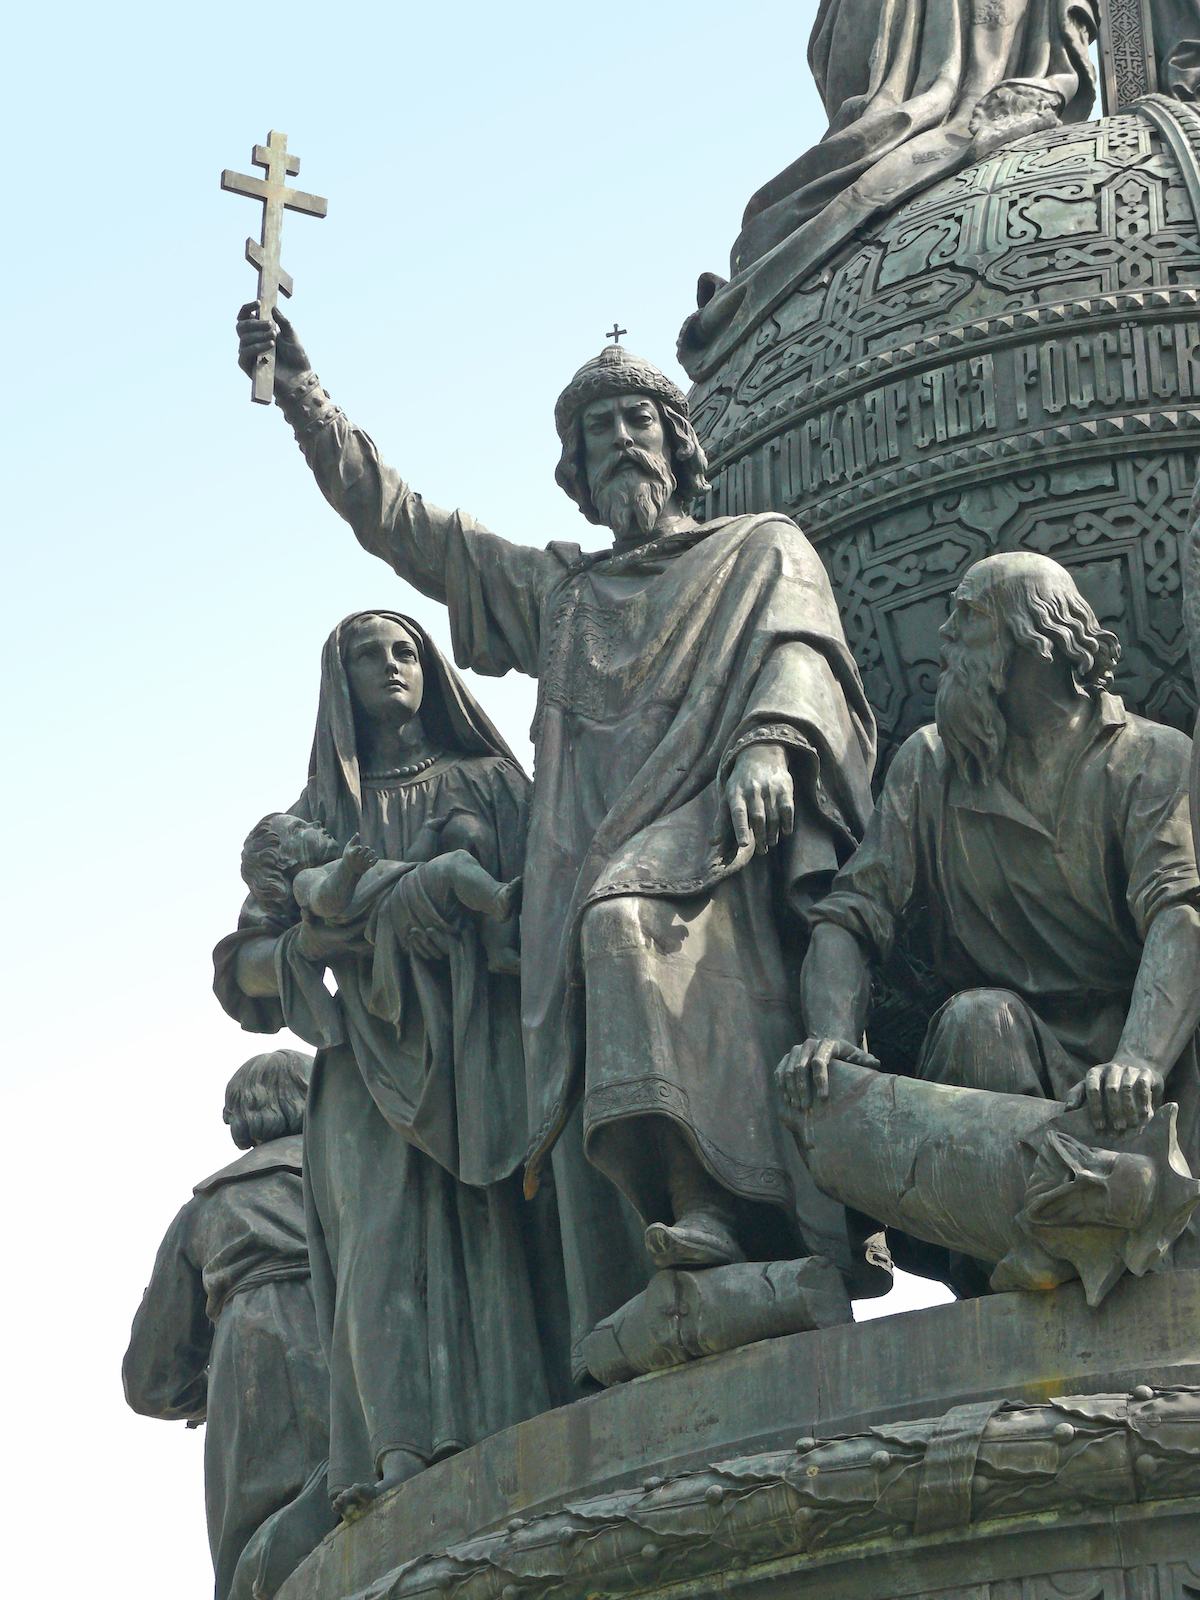 St. Vladimir of Kiev/Volodymyr of Kyiv on the Millennium of Russia monument in Veliky Novgorod, 2010. Дар Ветер (CC BY-SA 3.0)